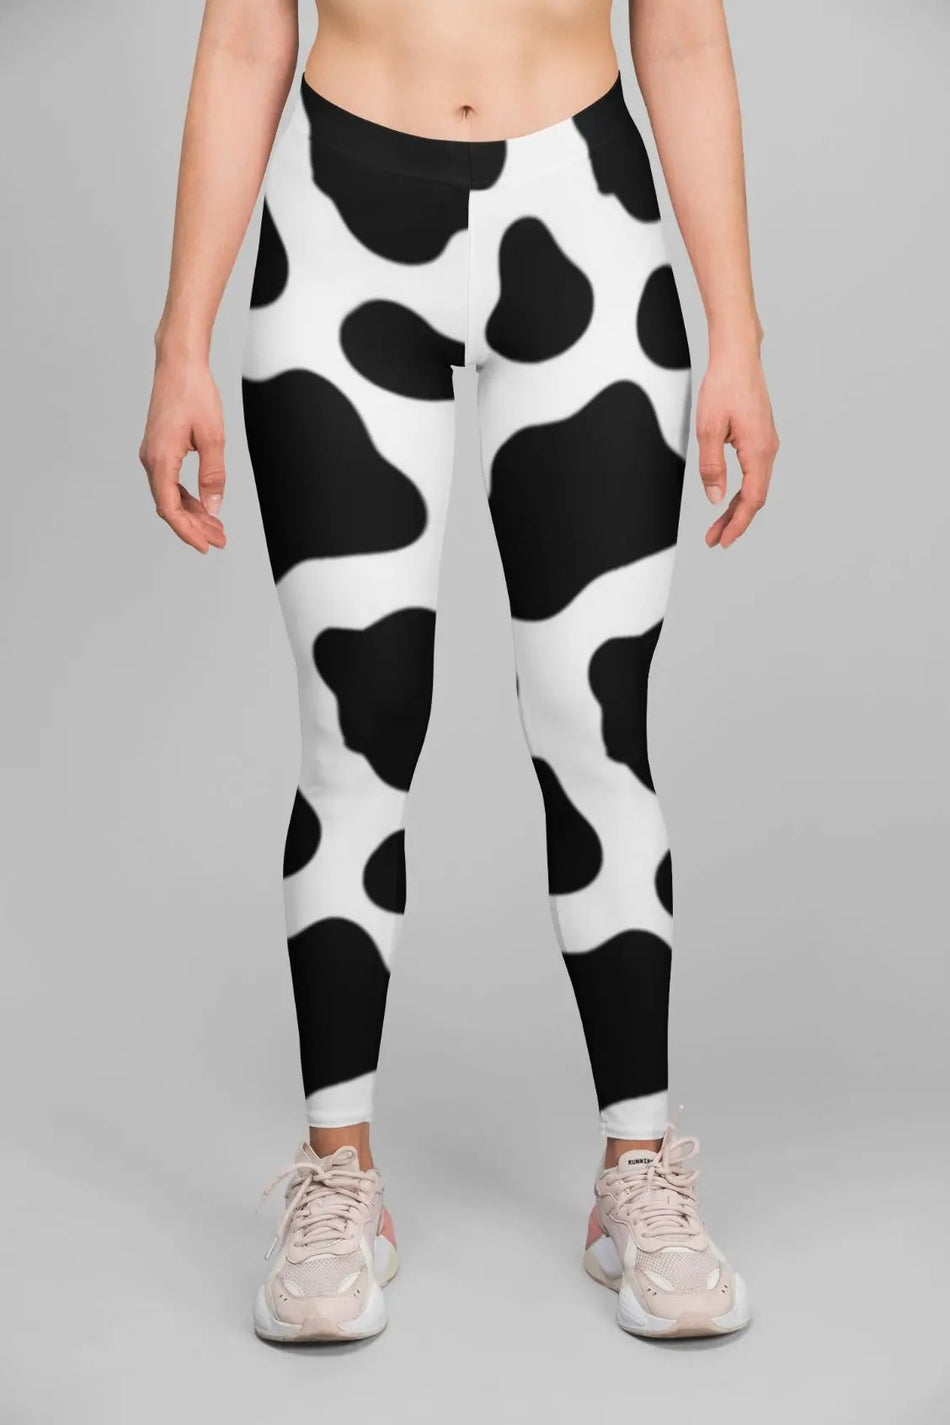 Cow Legging - Drakoi Marketplace